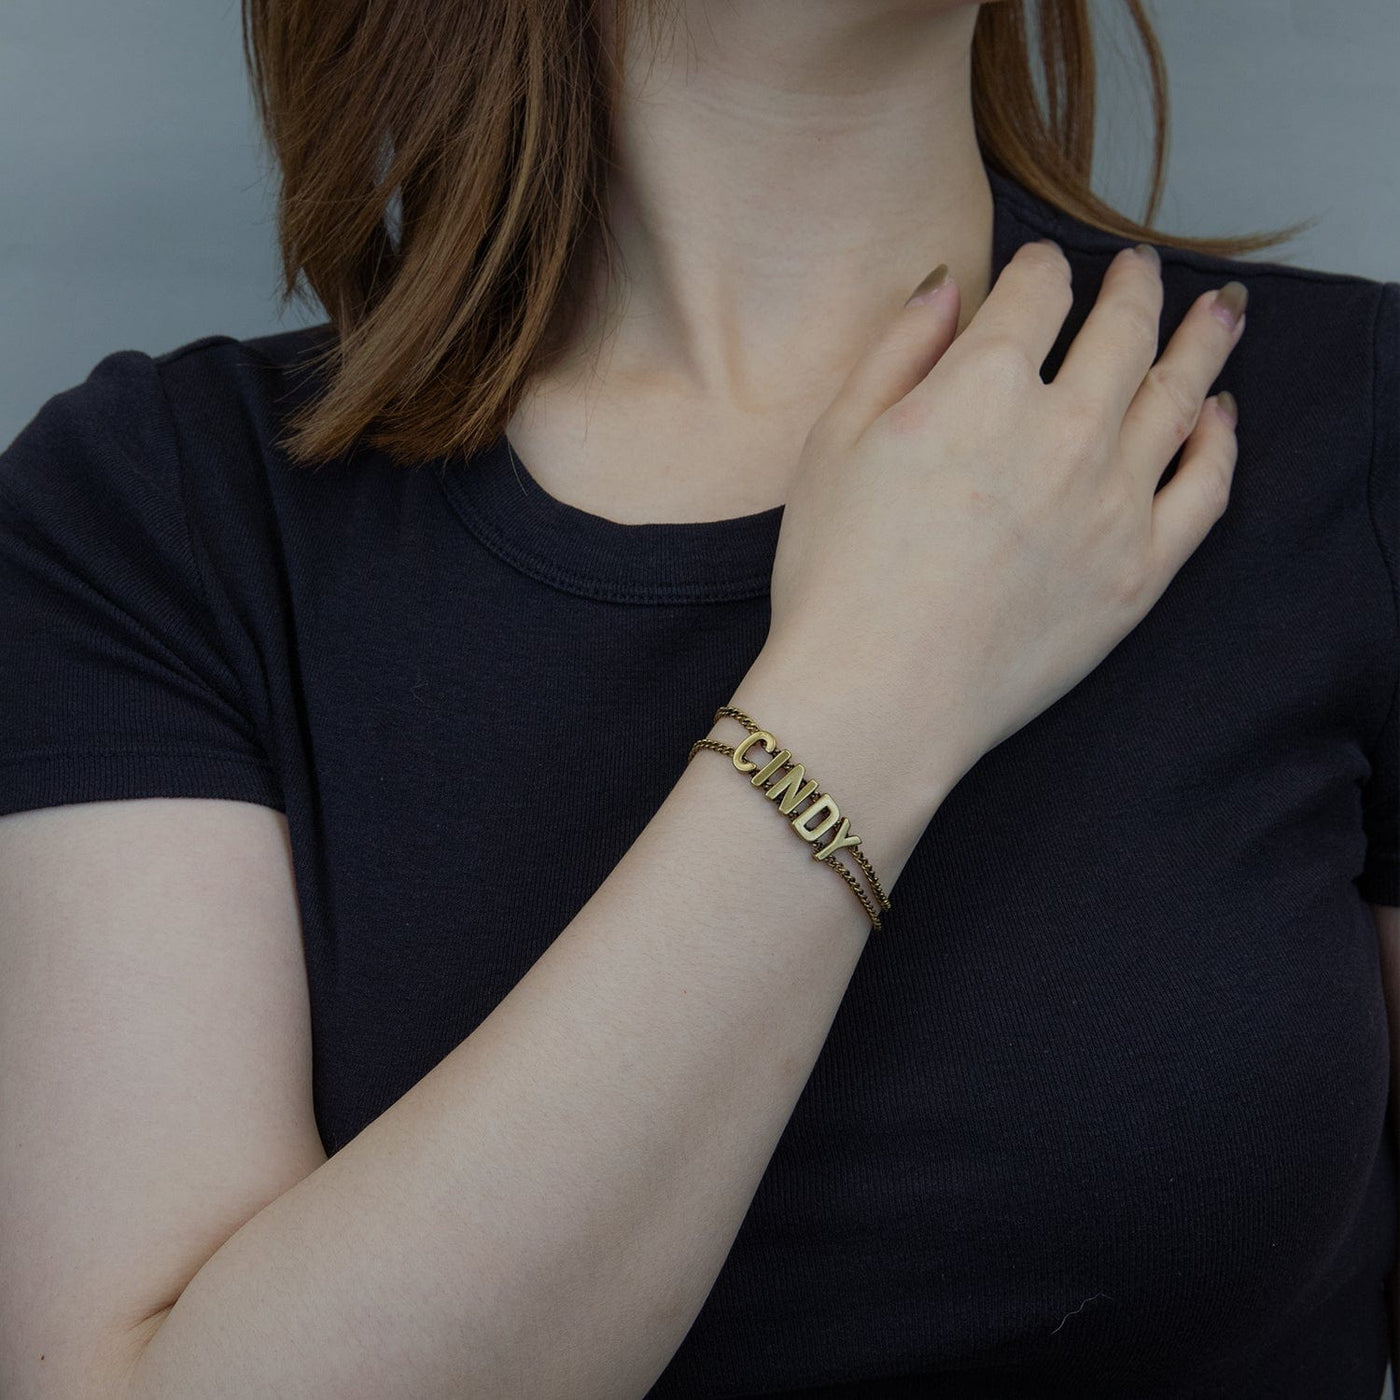 A woman wearing Cindy Personalized Name Bracelet 